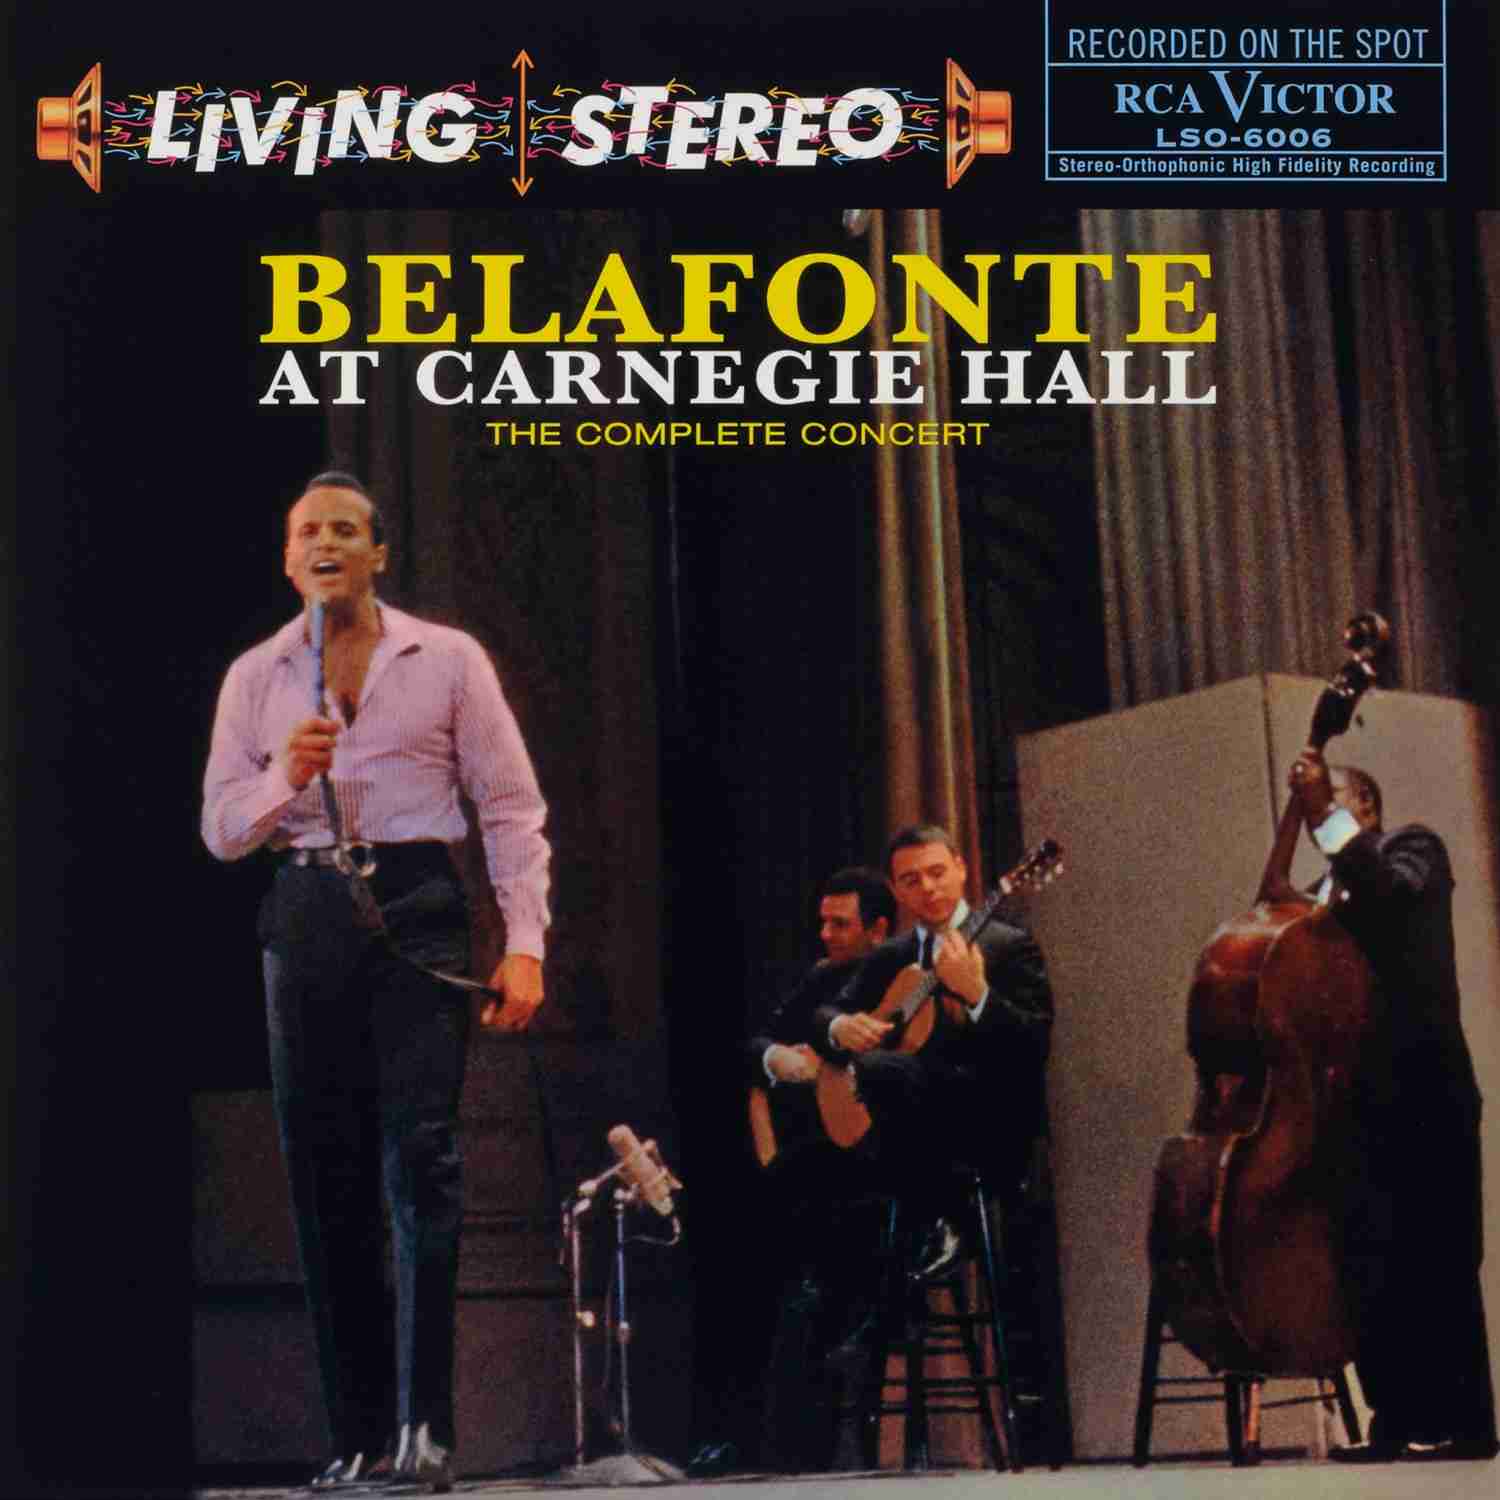 Schallplatte Harry Belafonte - Live at Carnegie Hall (Living Stereo) im Test, Bild 1